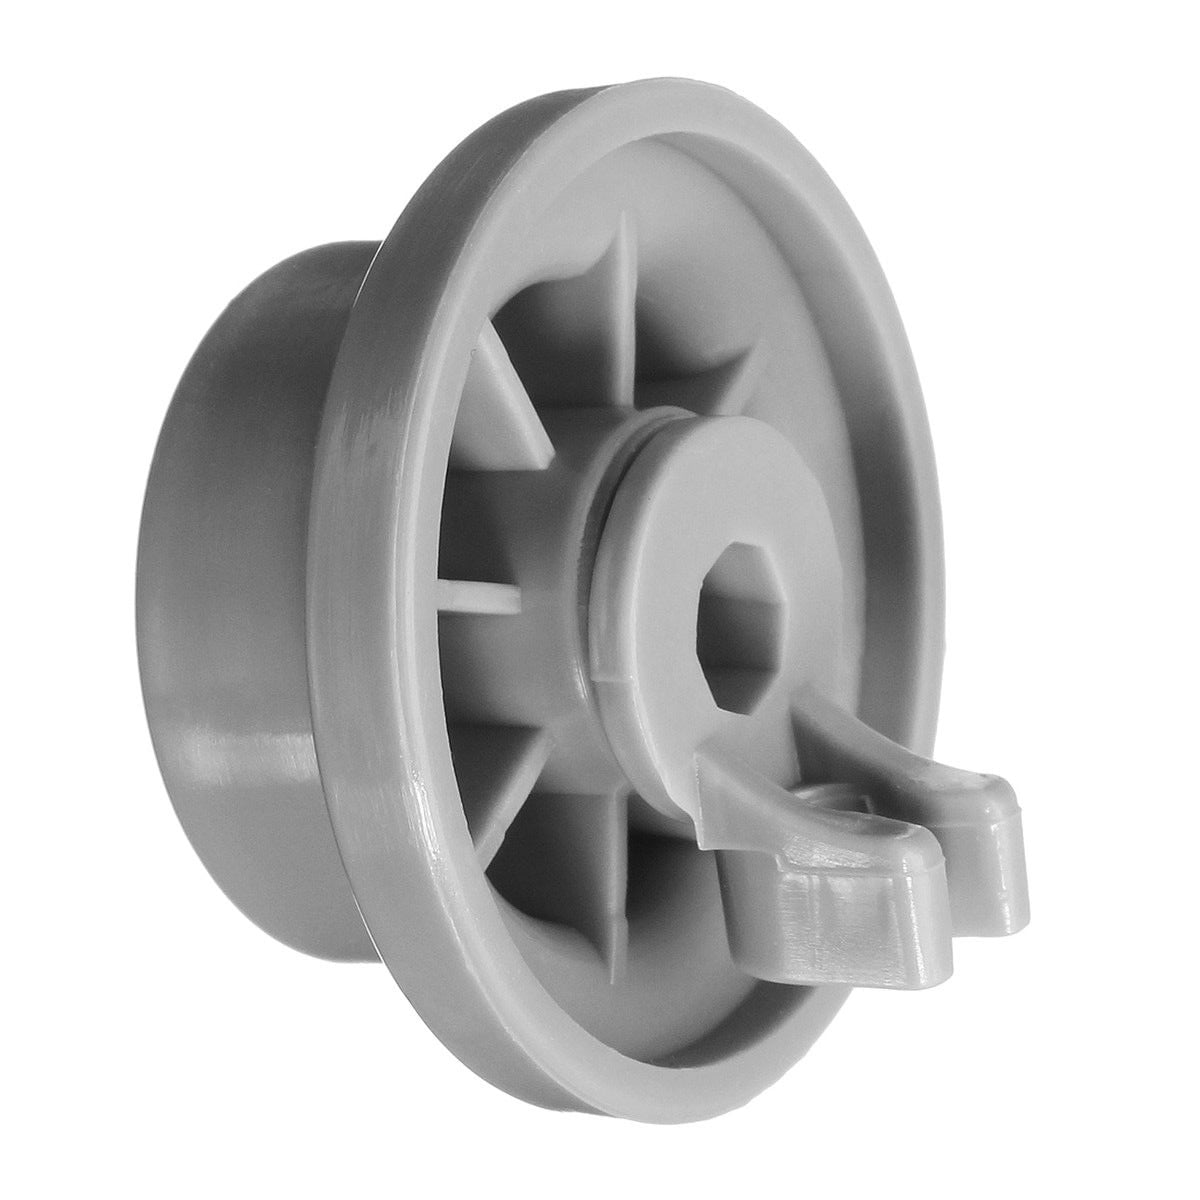 Pack of 2, Diameter 24mm SPARES2GO Upper Basket Wheels For Bosch Neff & Siemens Dishwasher 